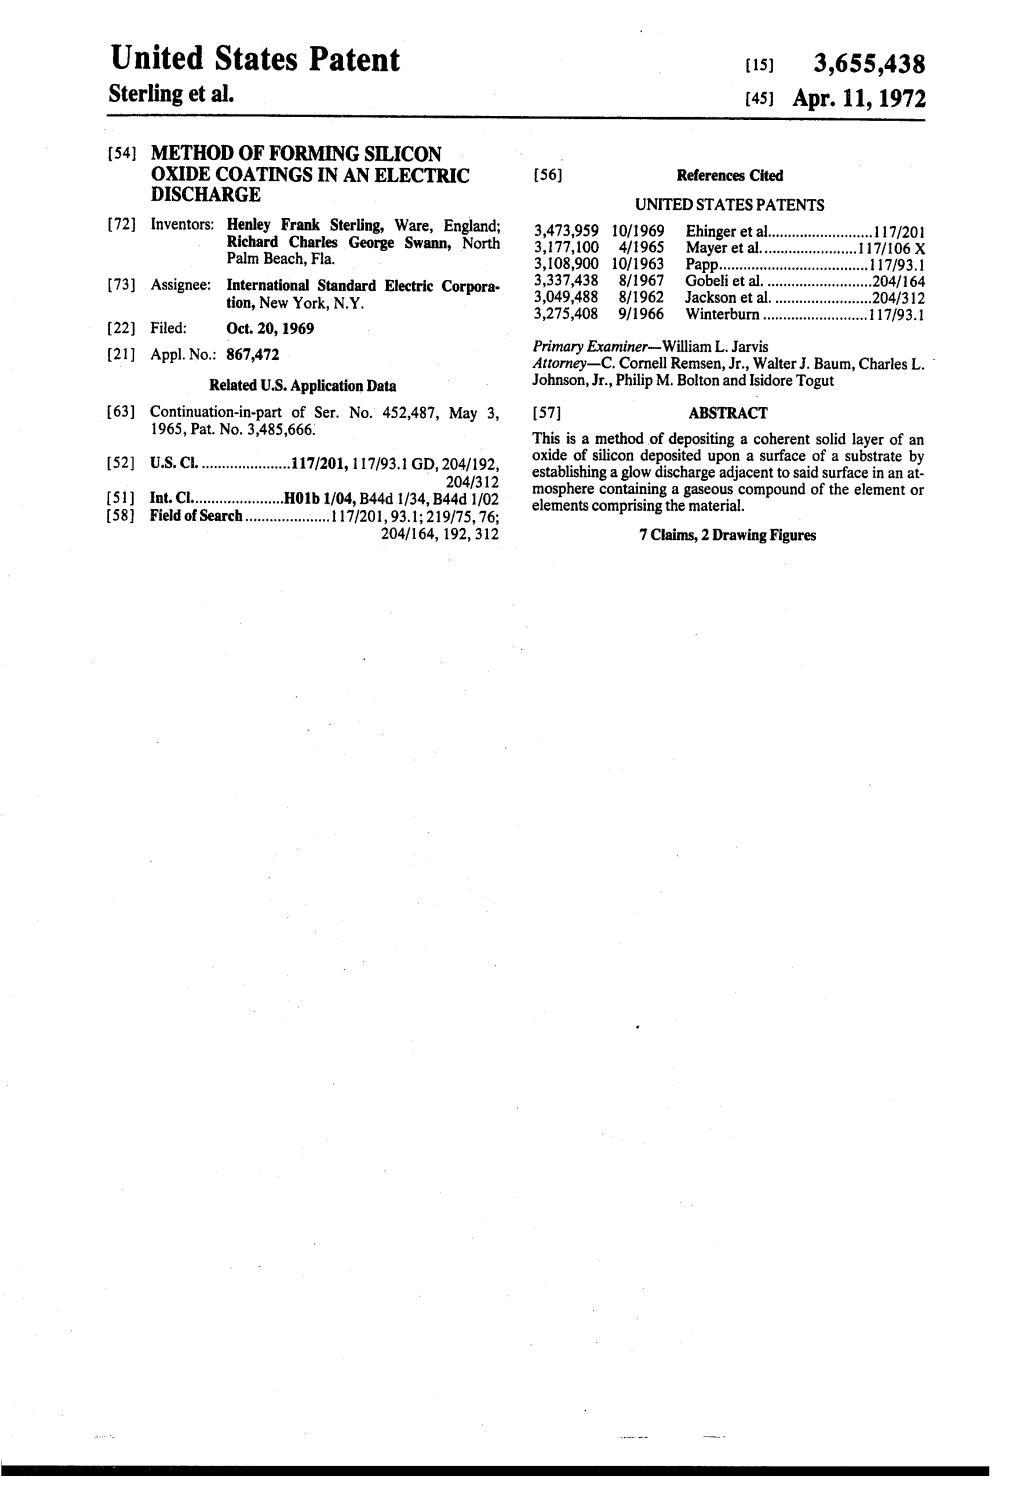 United States Patent (15) 3,655,438 Sterling Et Al